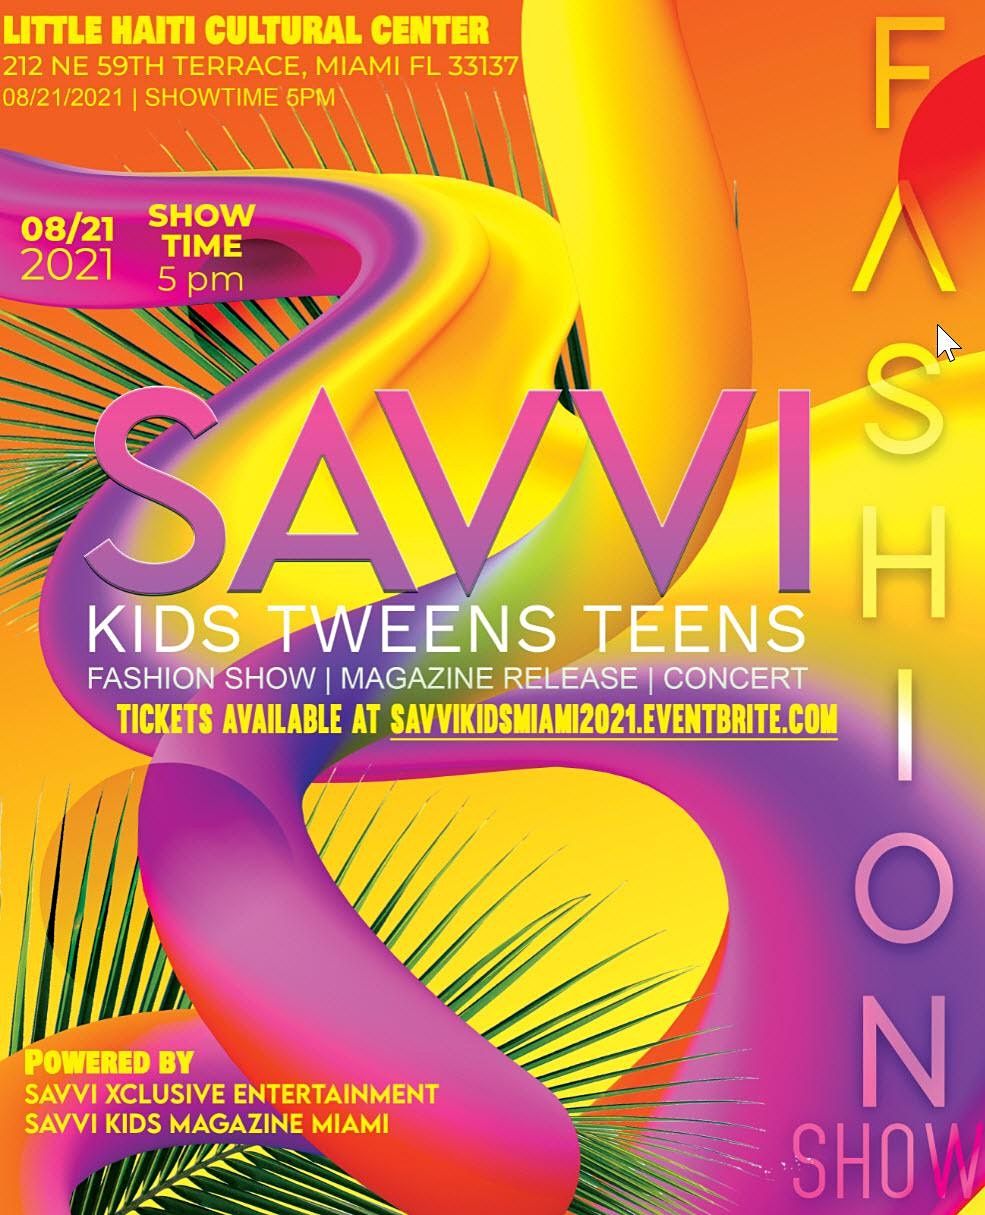 Savvi Kids of Miami Magazine Release Party and Fashion Show